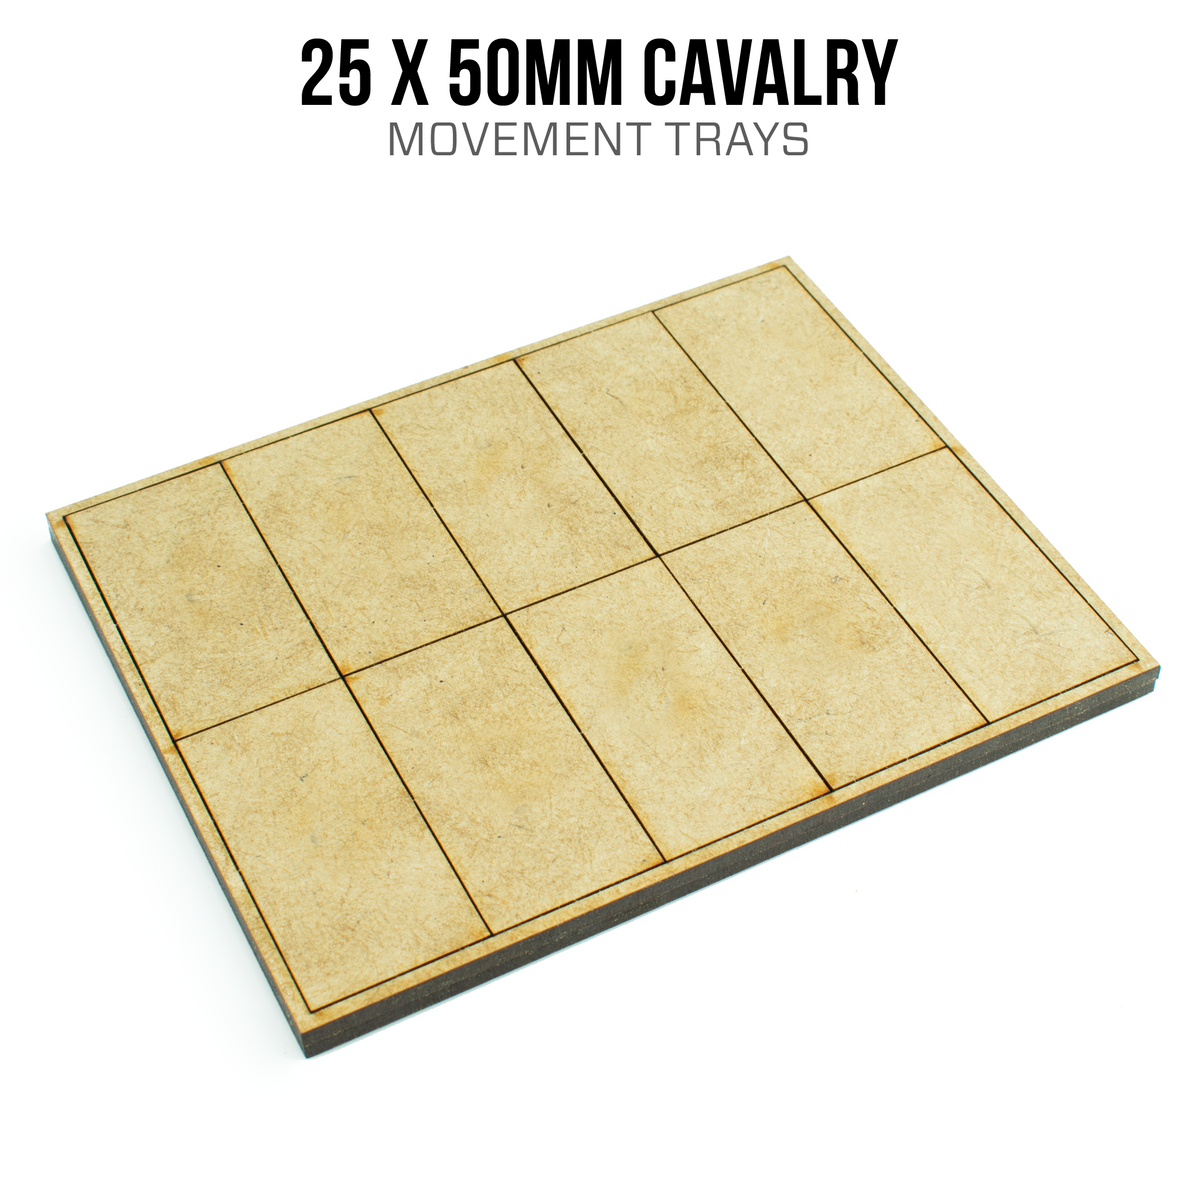 25mm x 50mm Cavalry Movement Trays